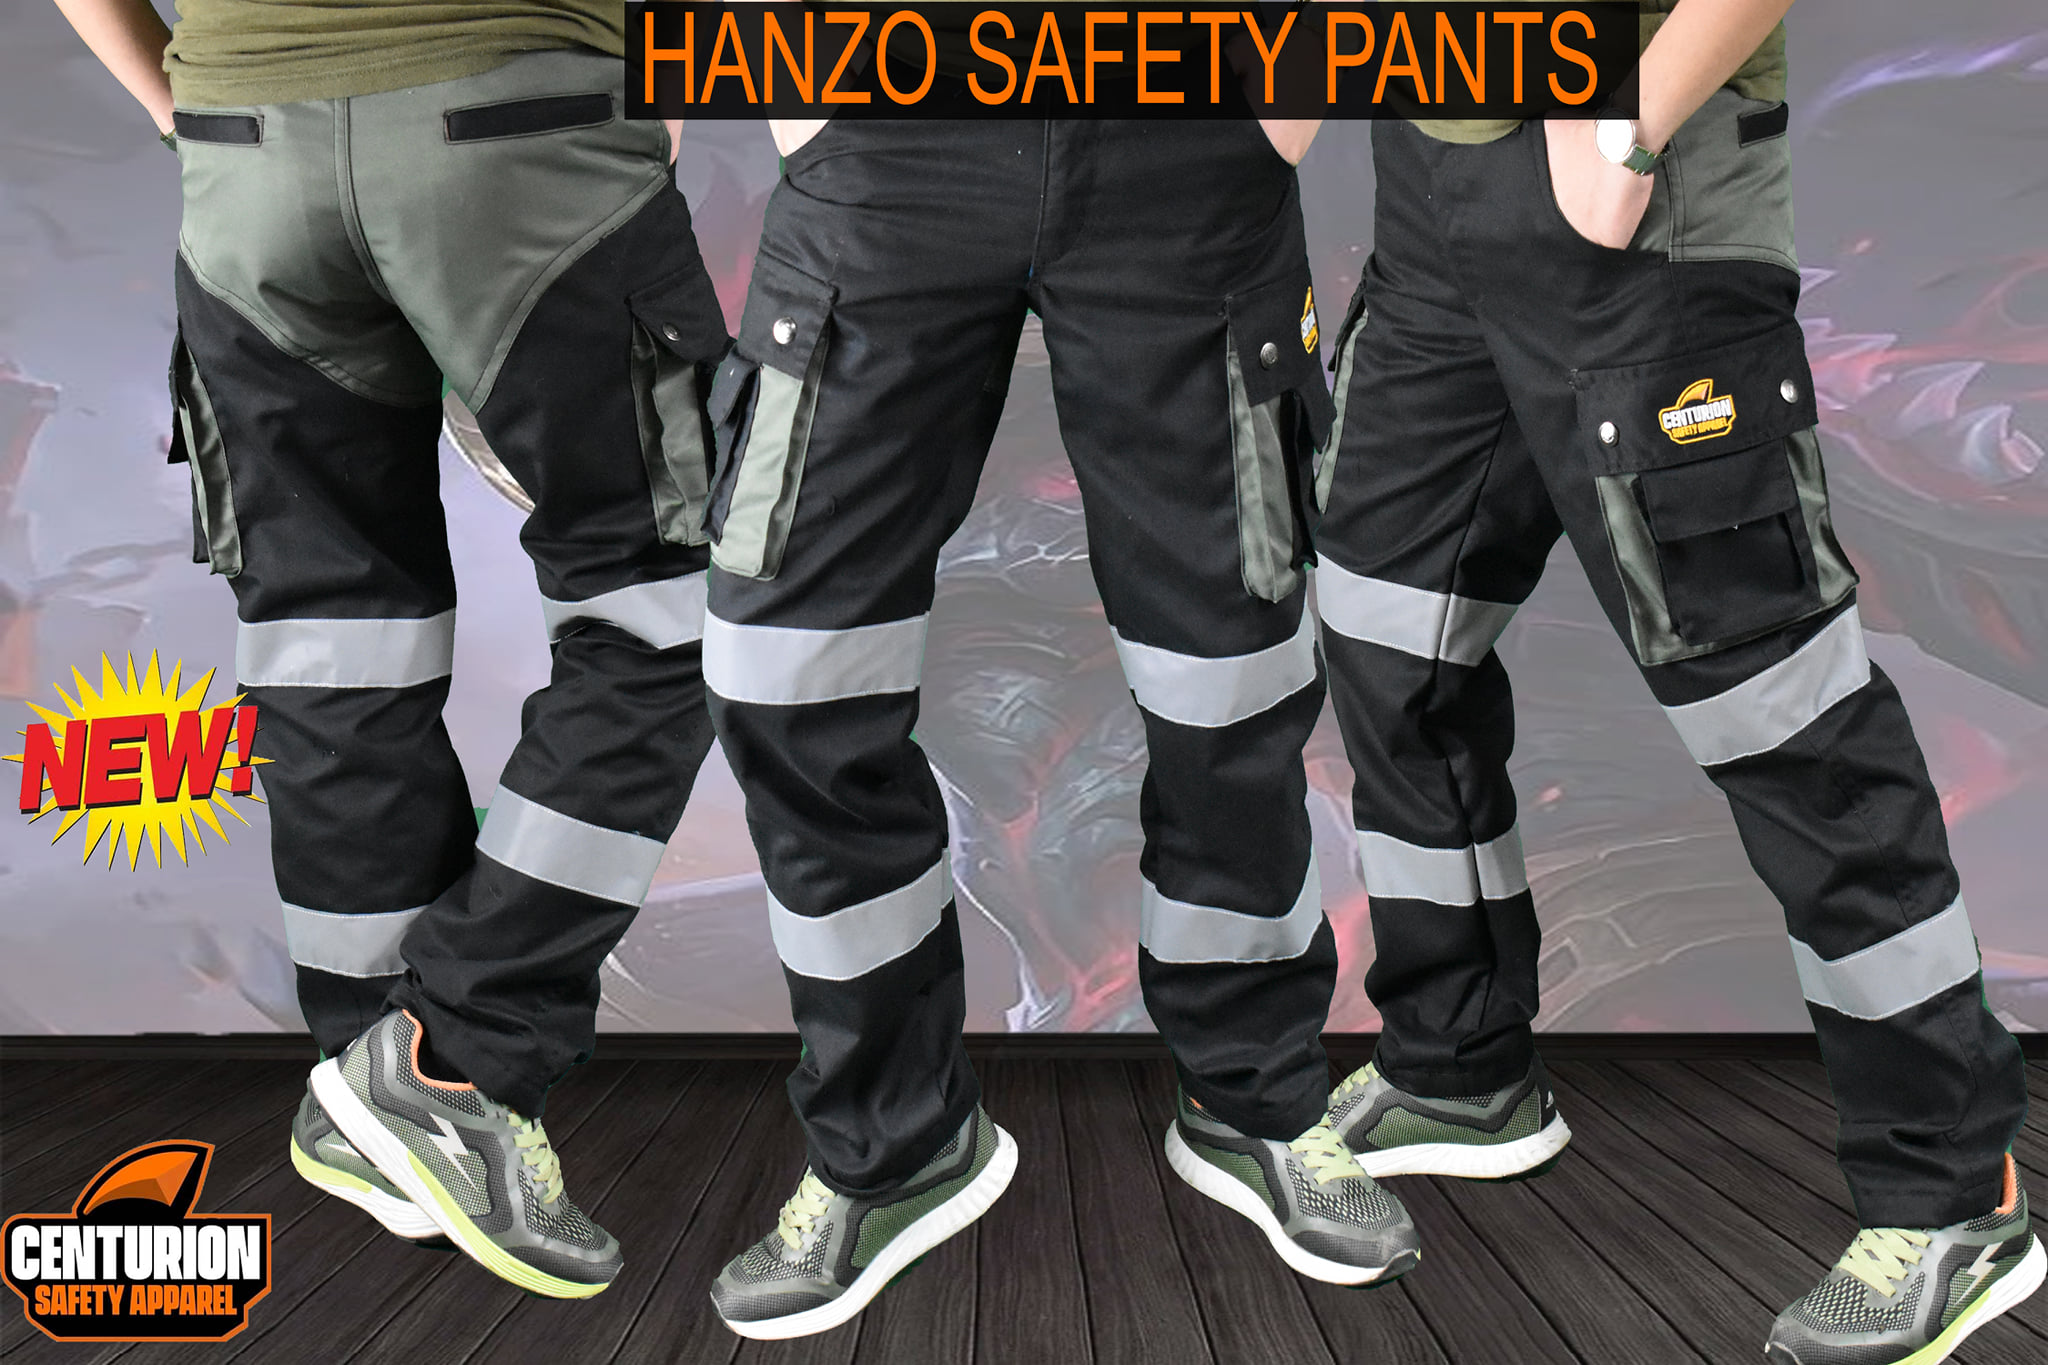 HANZO, 8 pocket tactical rider reflectorized safety pants